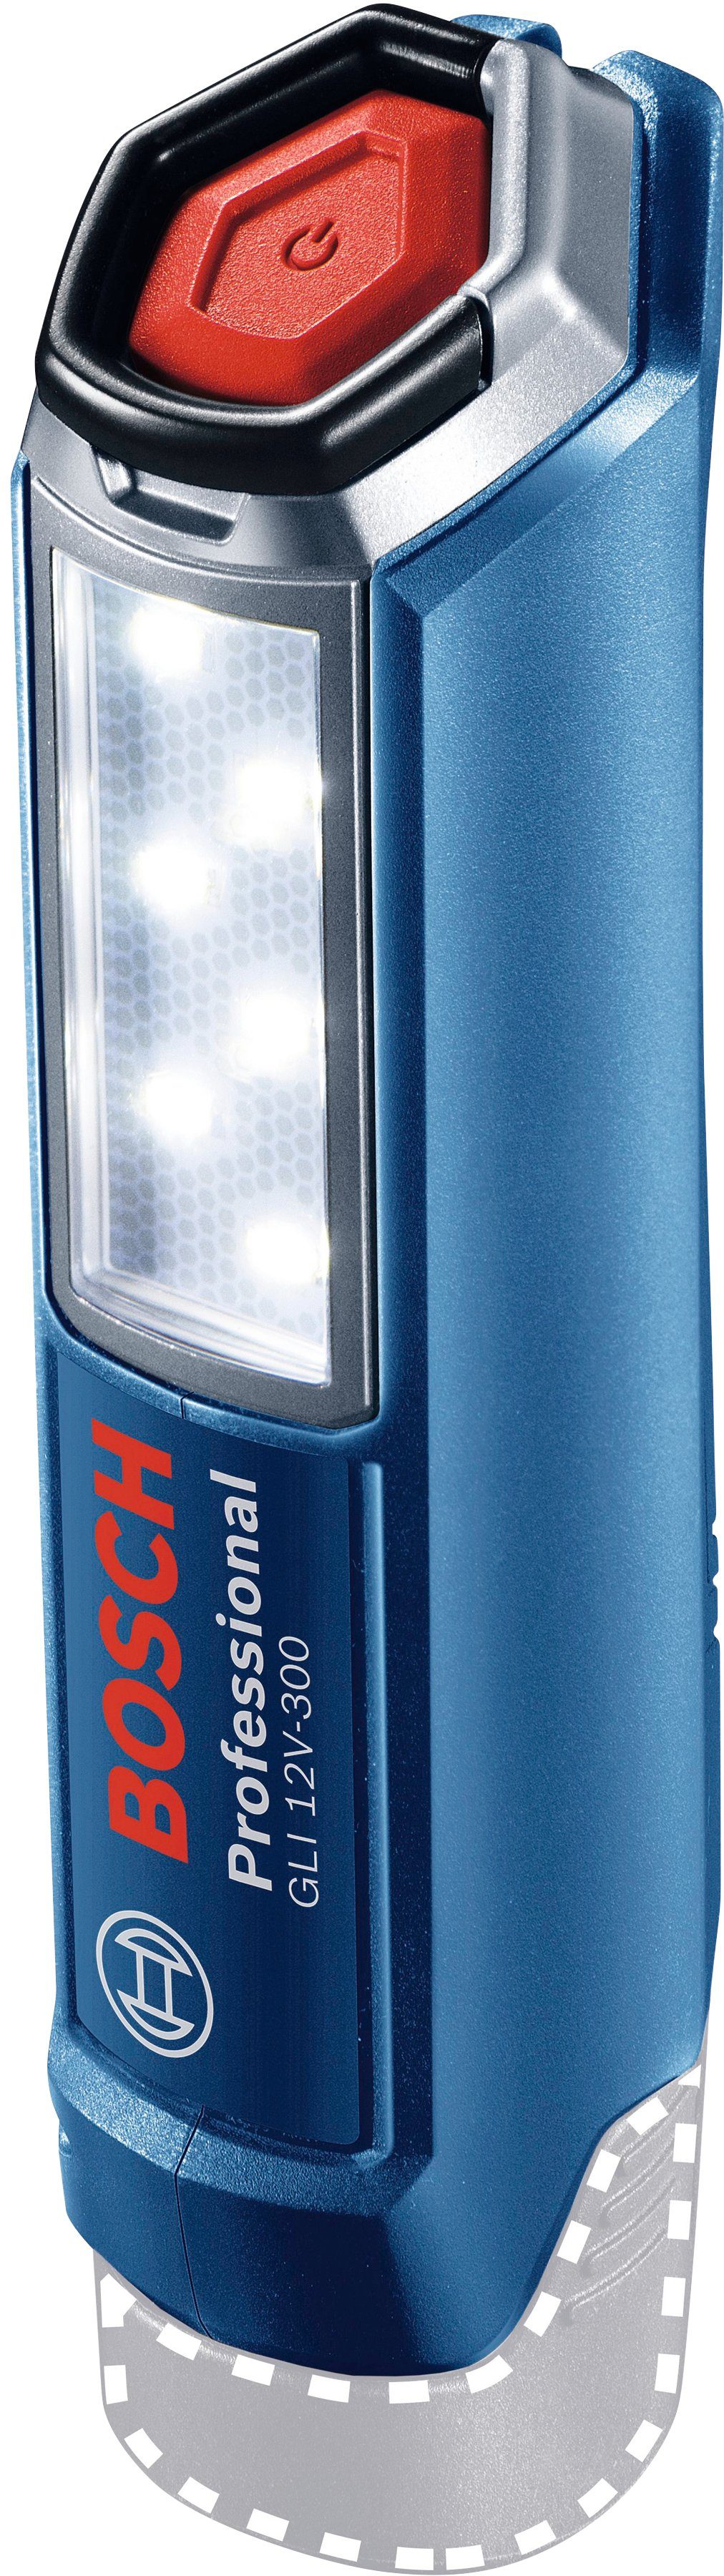 Bosch Professional LED Arbeitsleuchte GLI 12V-300, LED fest integriert, 12 V, 300 lm, ohne Akku | Arbeitsleuchten